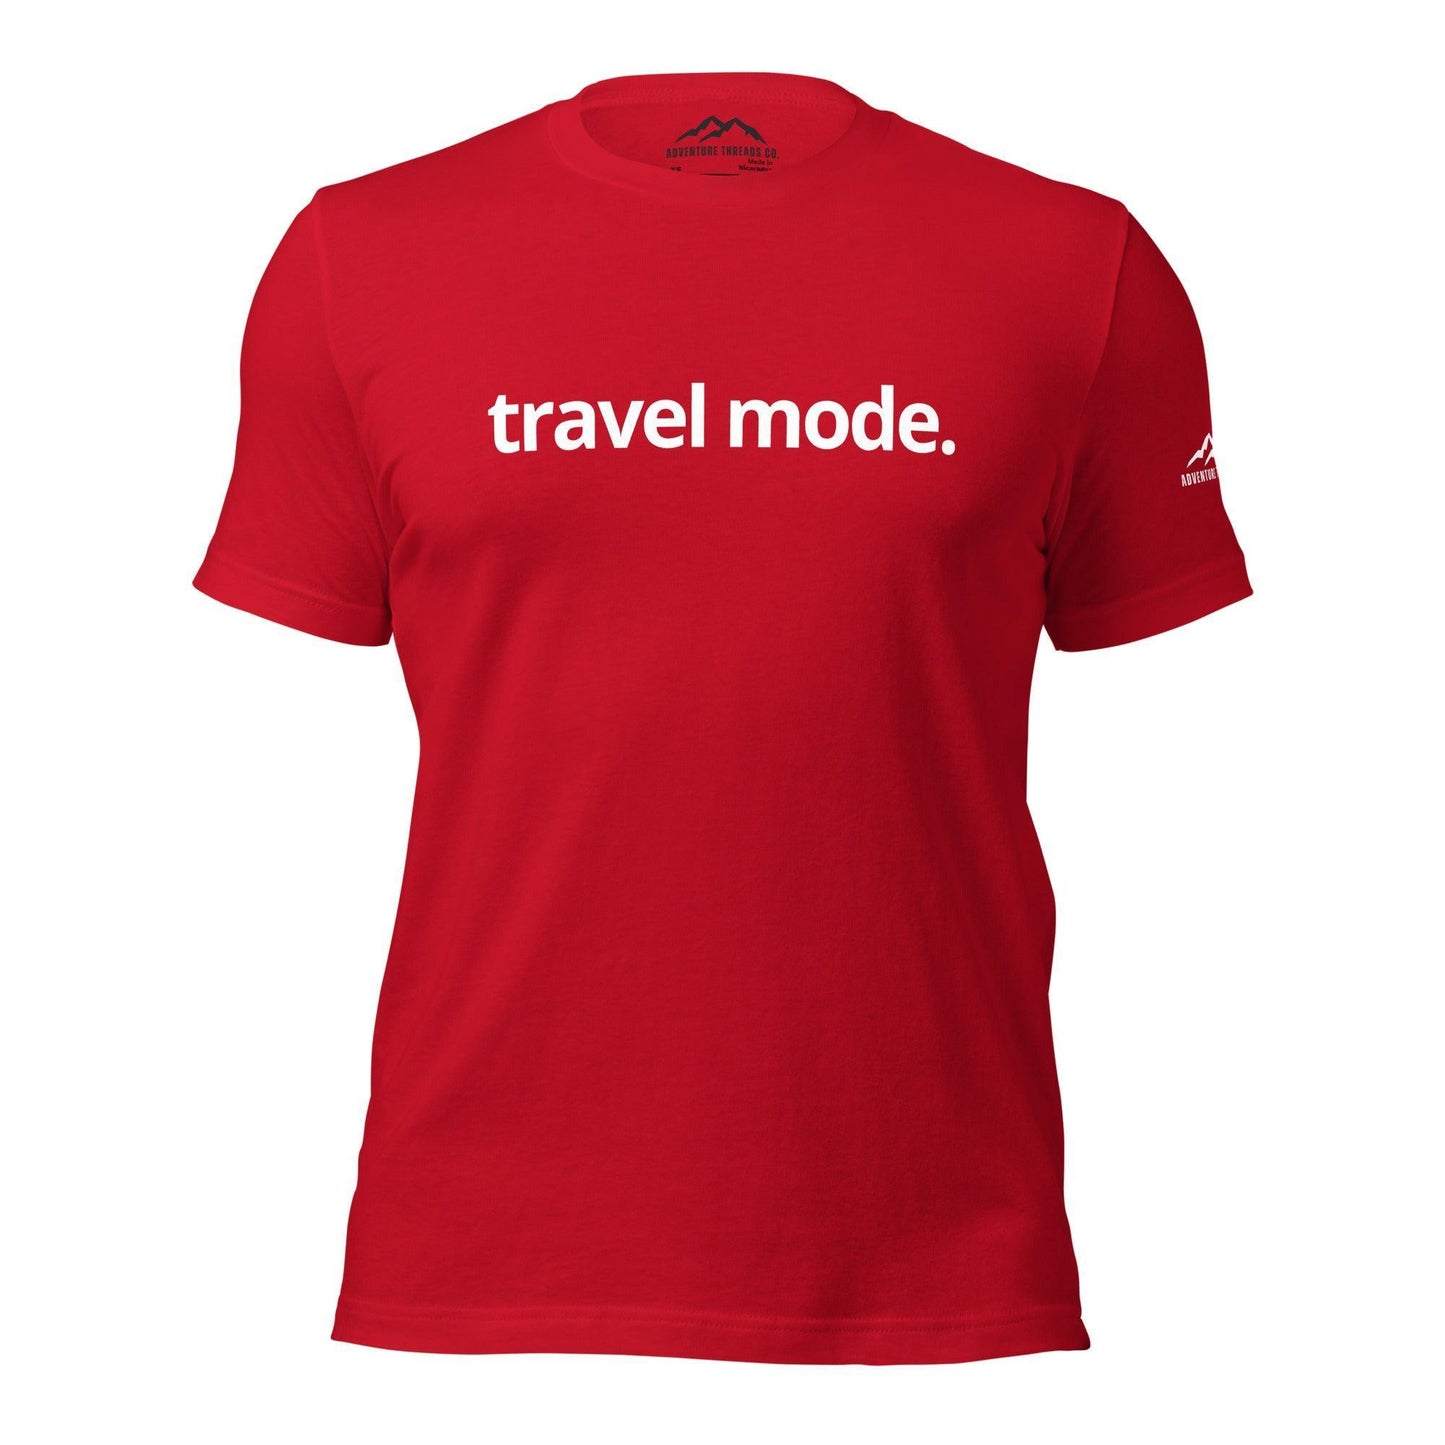 Travel Mode. T-shirt - Adventure Threads Company